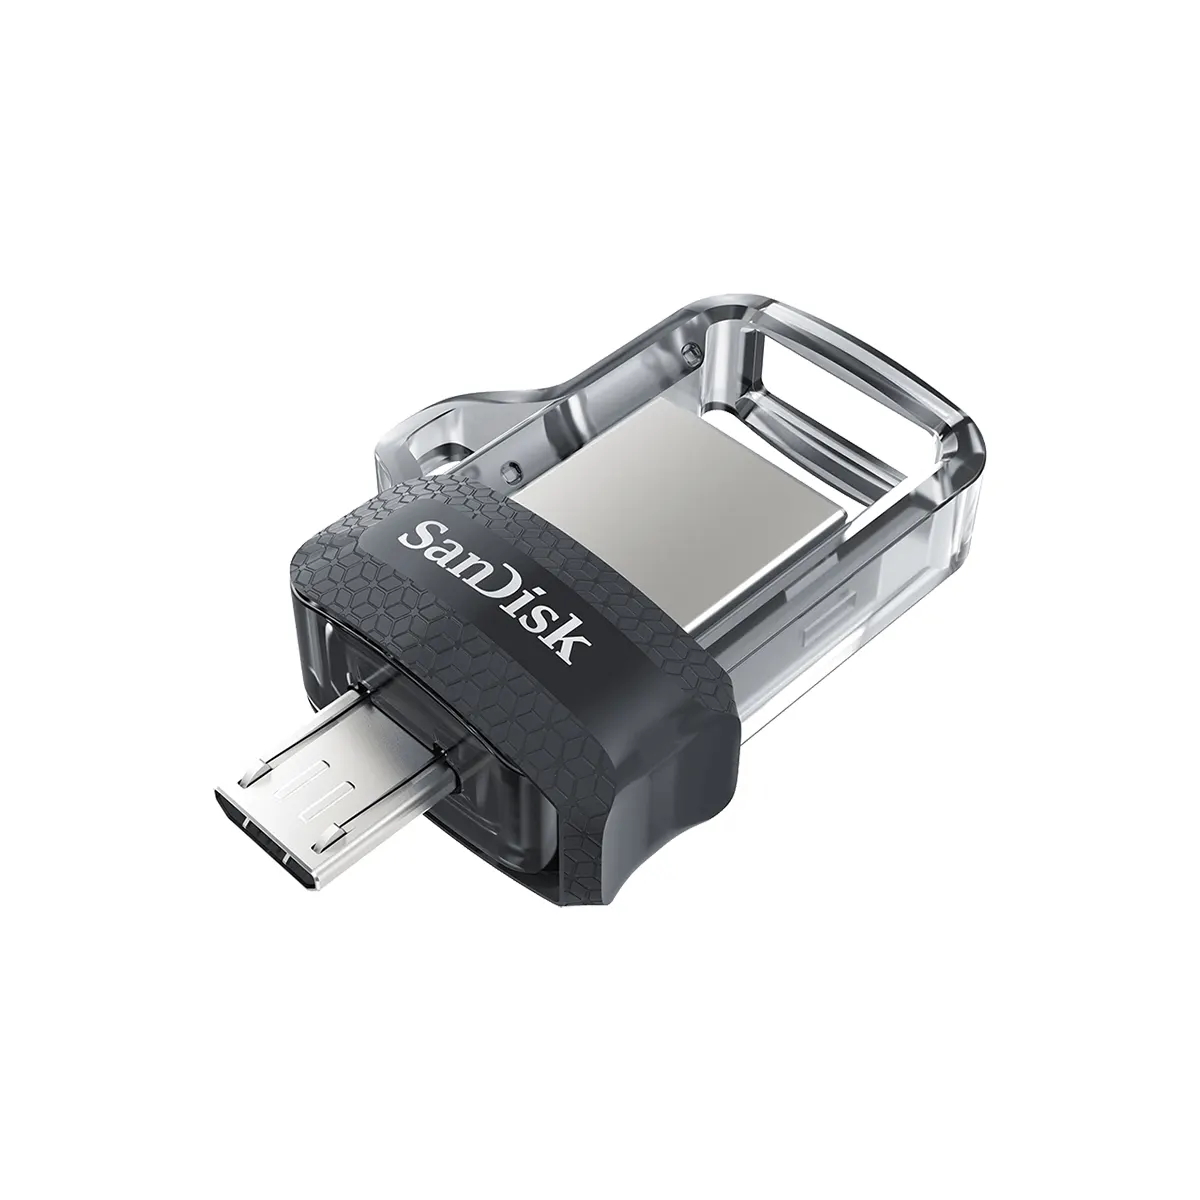 فلش مموری سندیسک SanDisk Ultra Dual Drive m3.0 USB 3.0 32GB + MicroUSB OTG